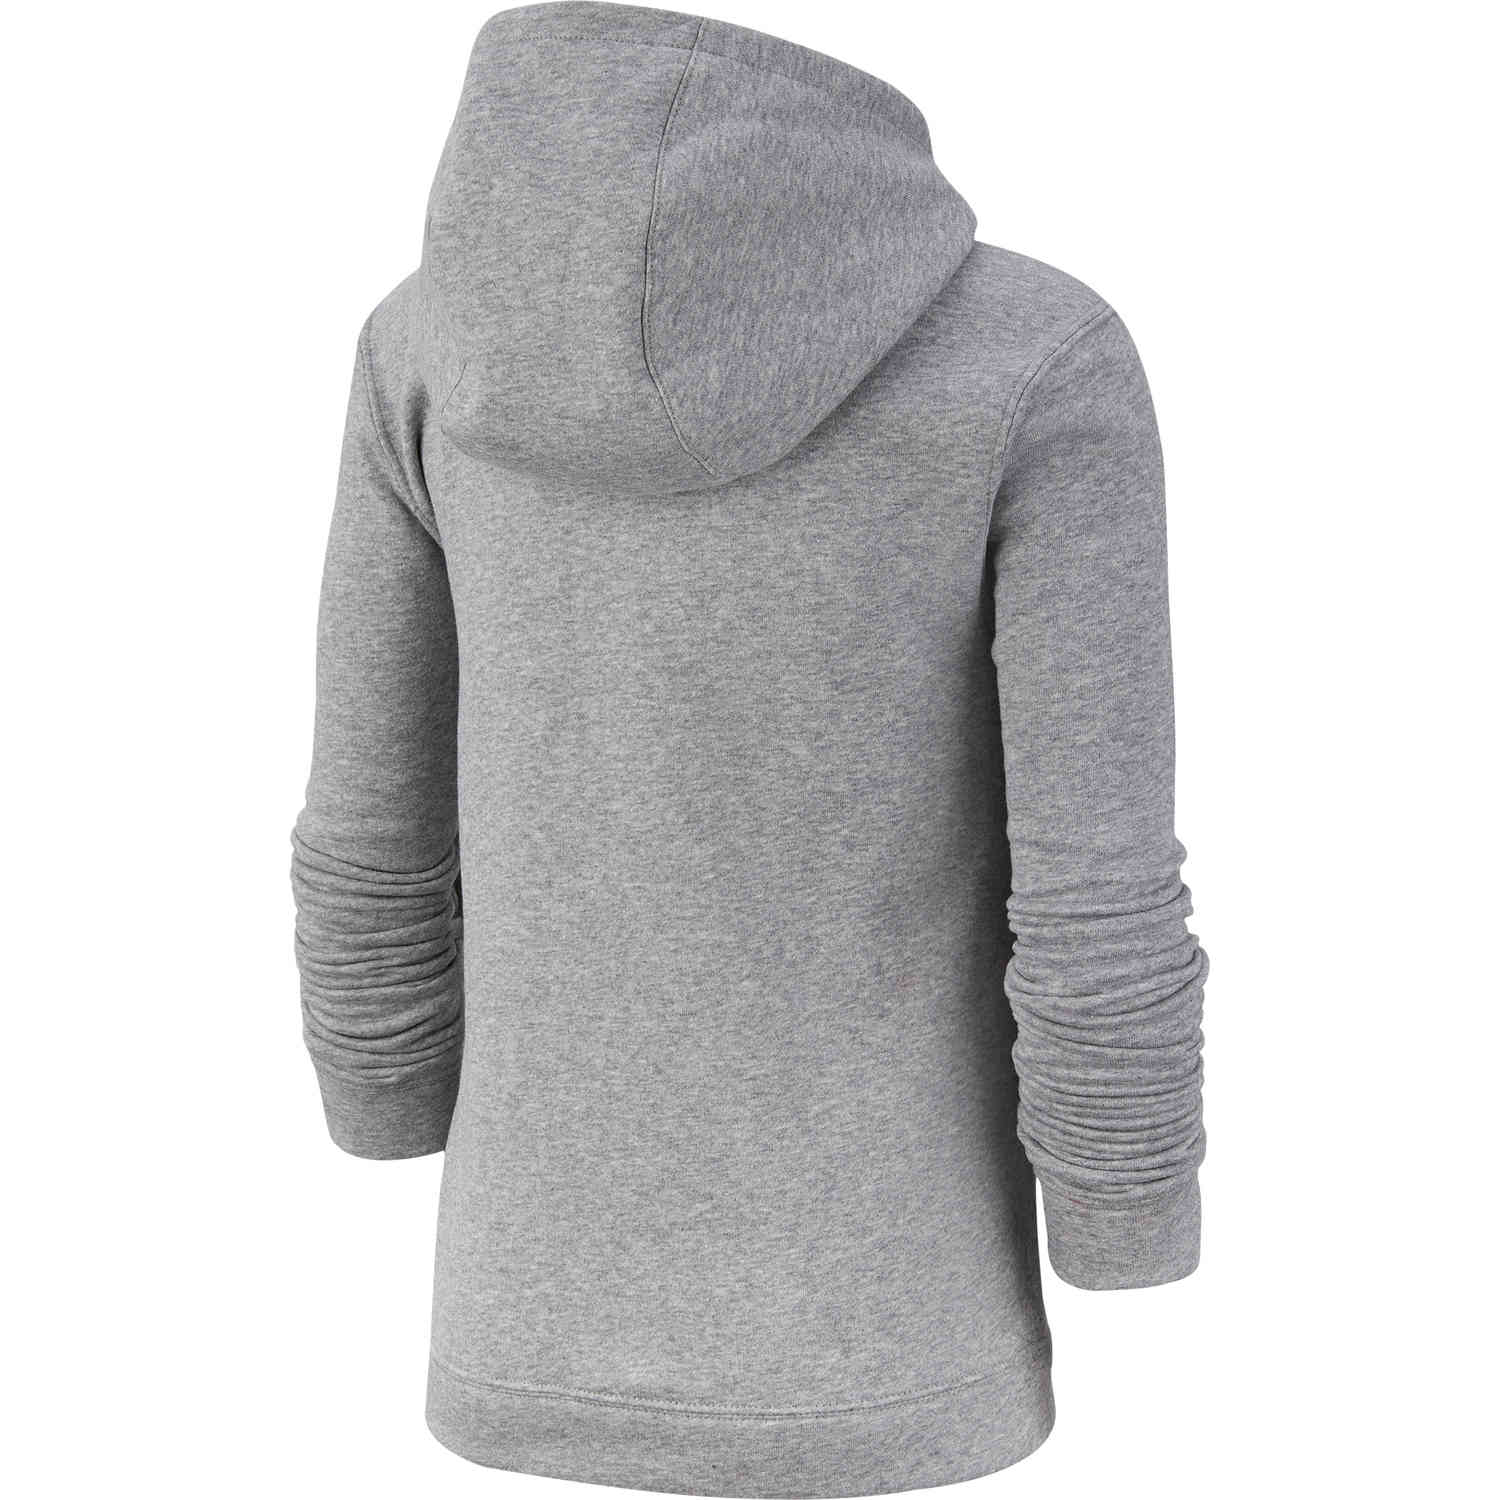 Kids Nike Sportswear Pullover Fleece Hoodie - Dark Grey Heather/Black ...